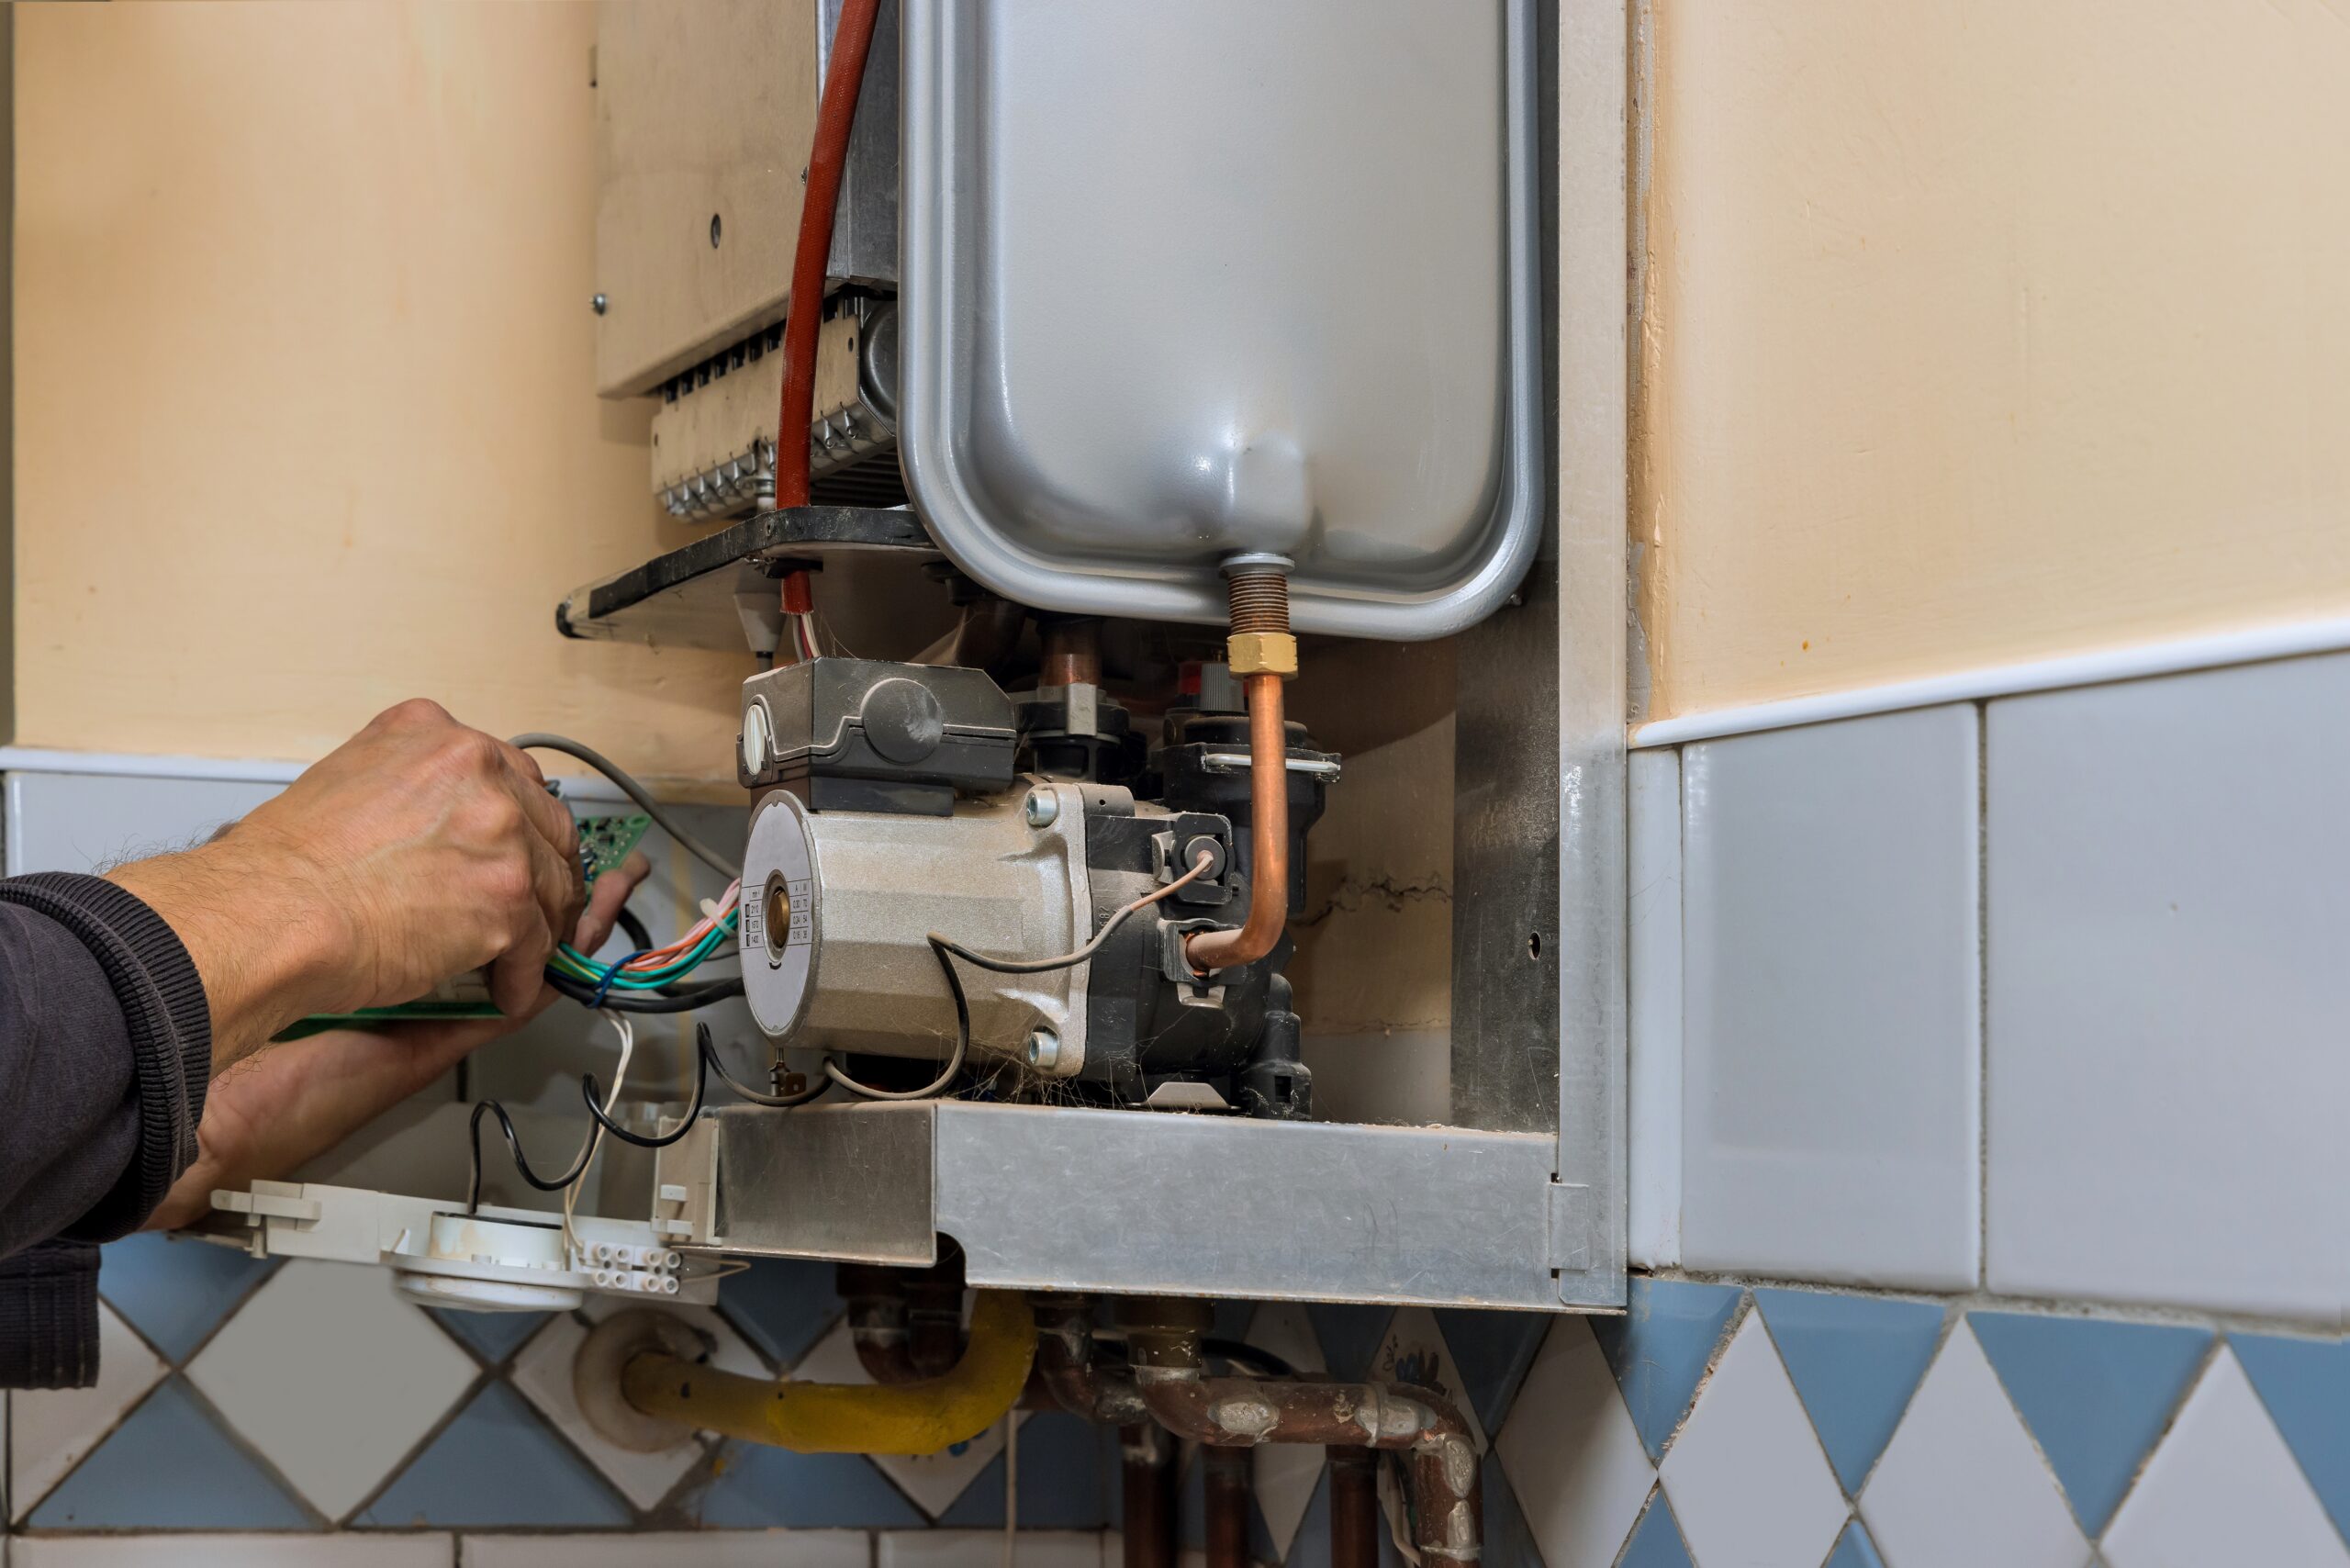 water heater maintenance service technician repair 2023 11 27 05 09 19 utc scaled